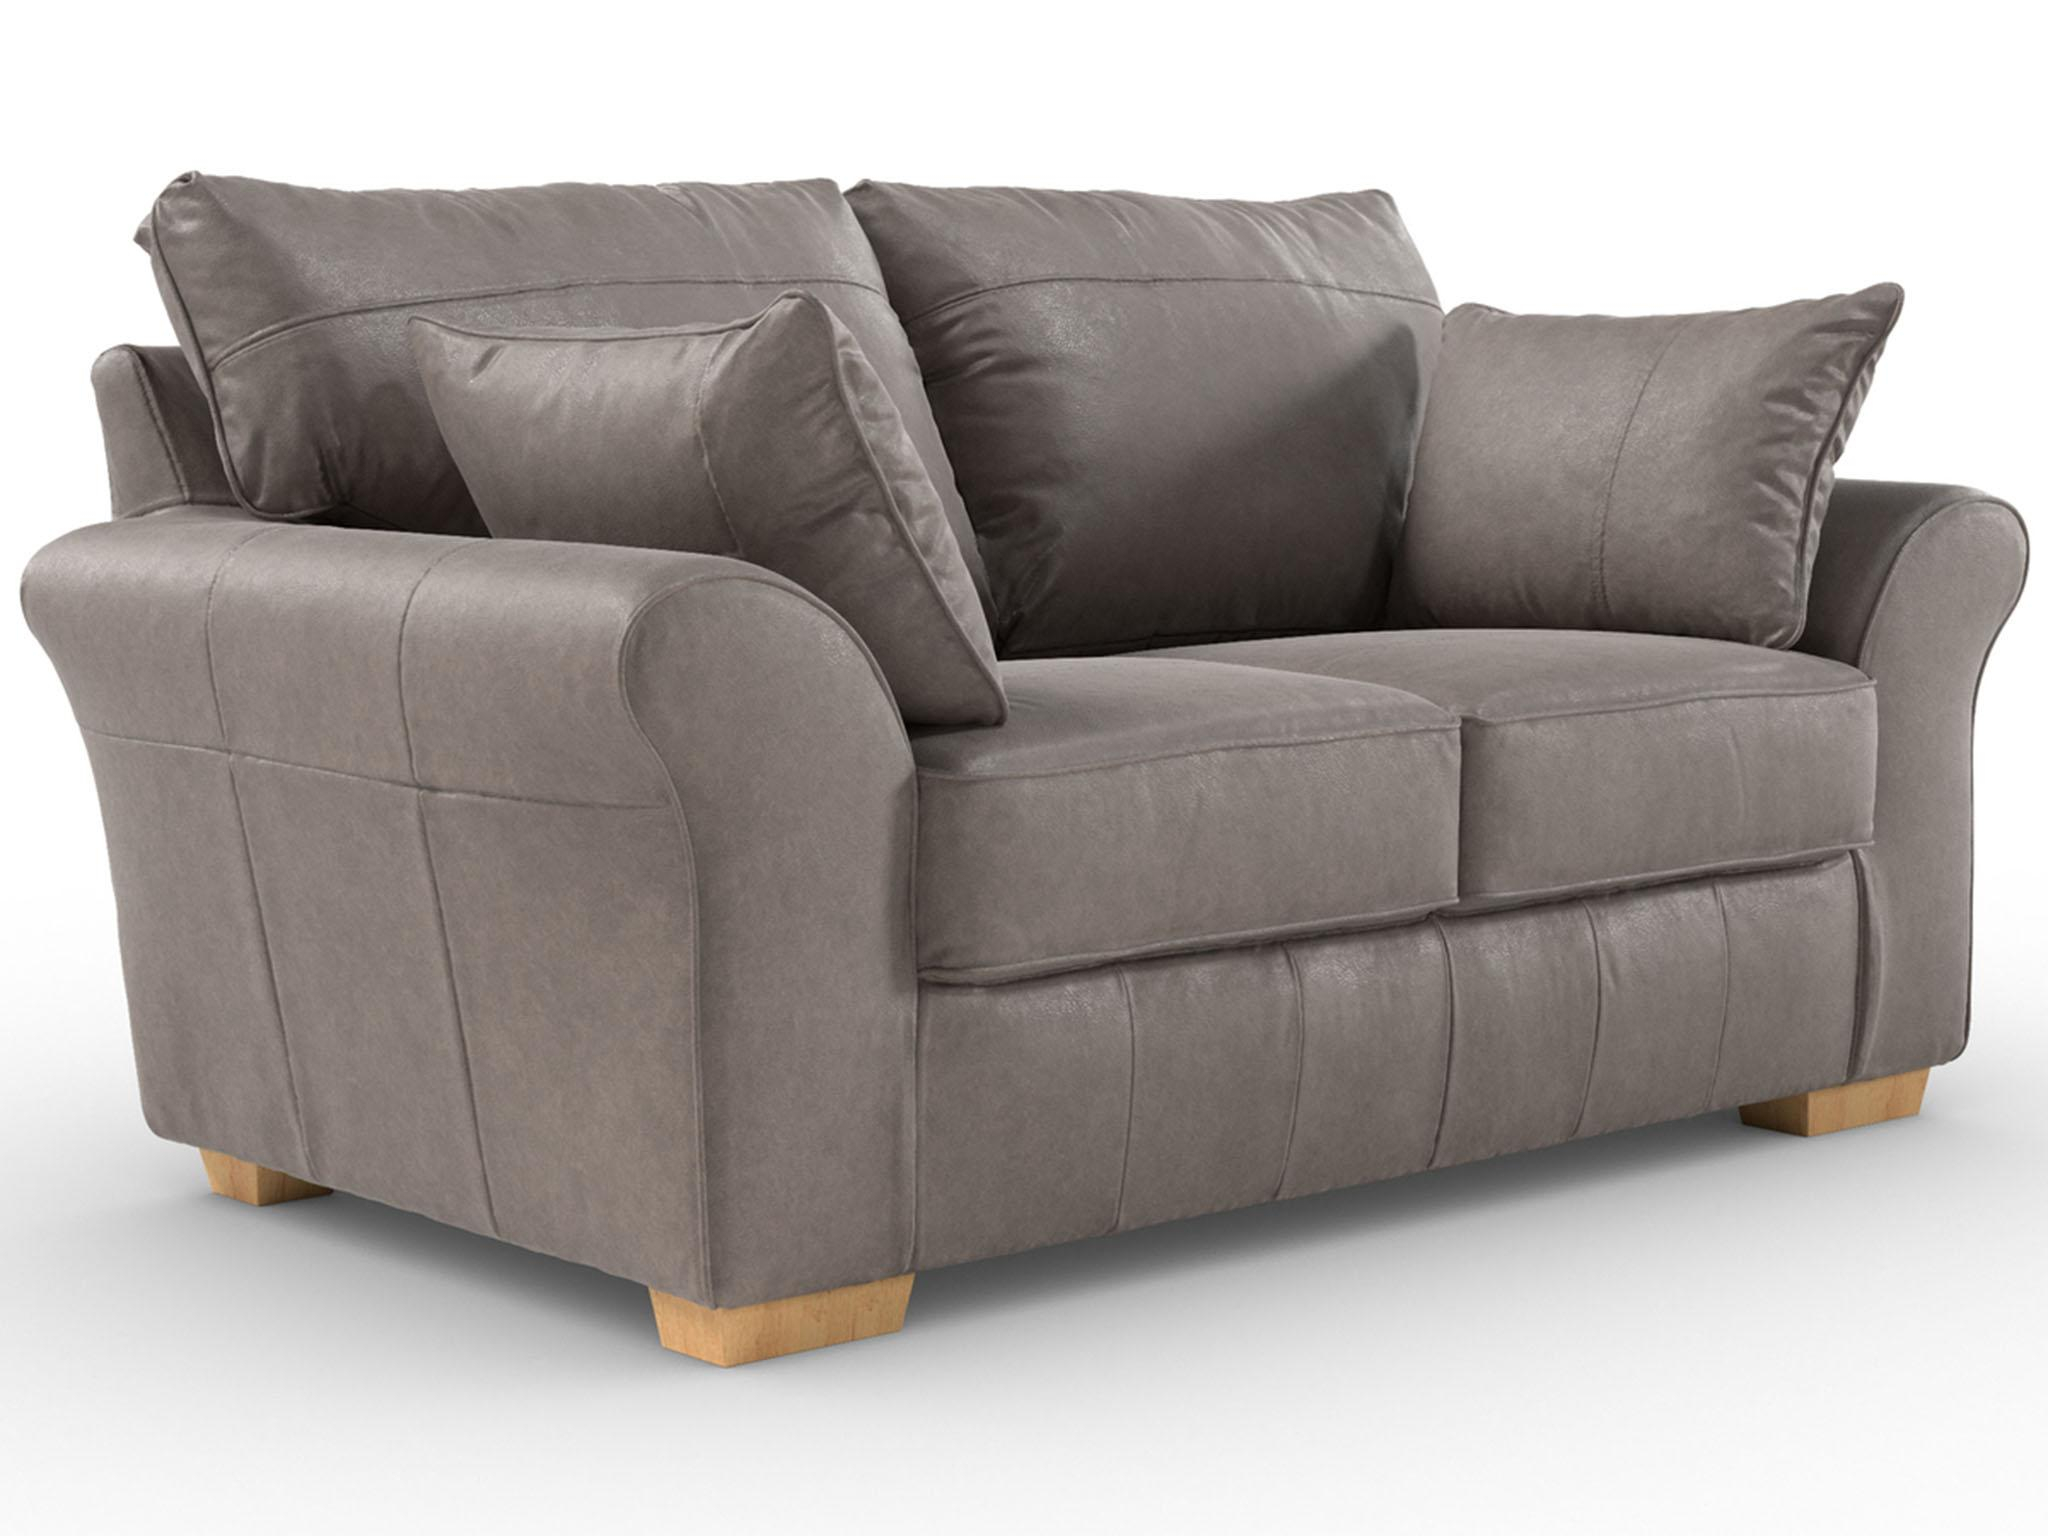 comfortable leather sofa uk